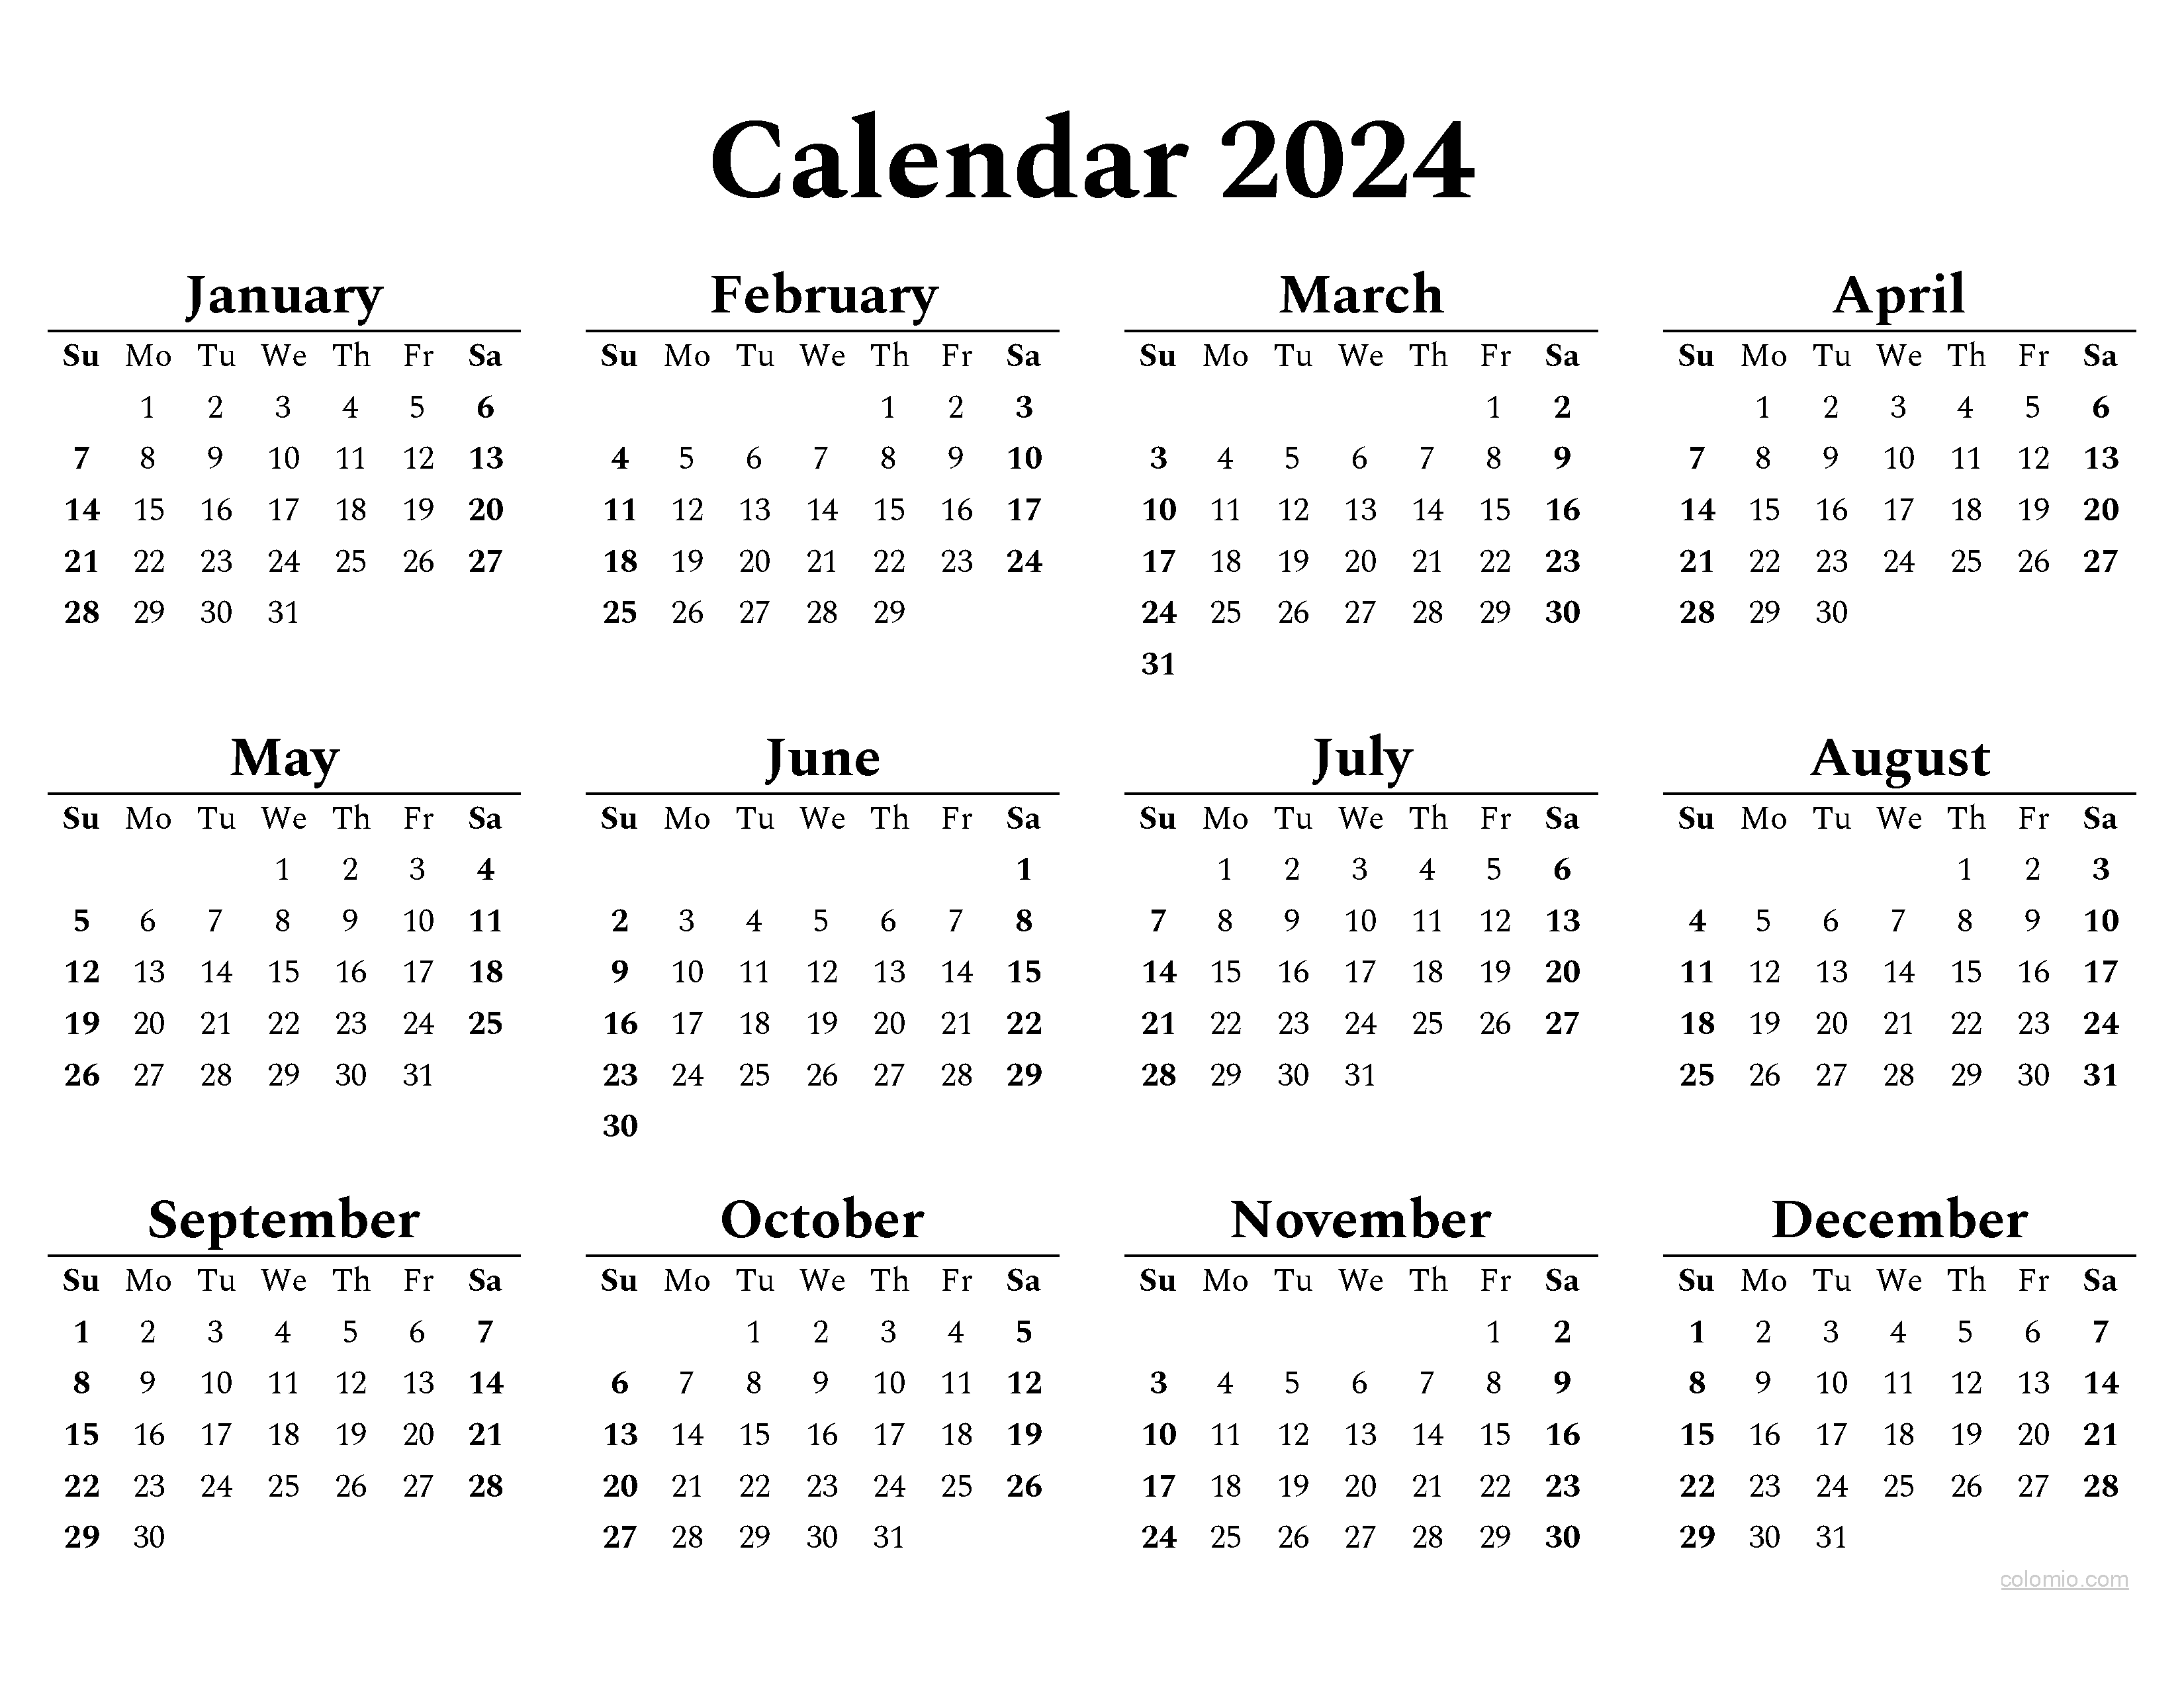 Calendar 2024 Template Pdf Fina Orelle - Free Printable 2024 Calendar Children Imogee